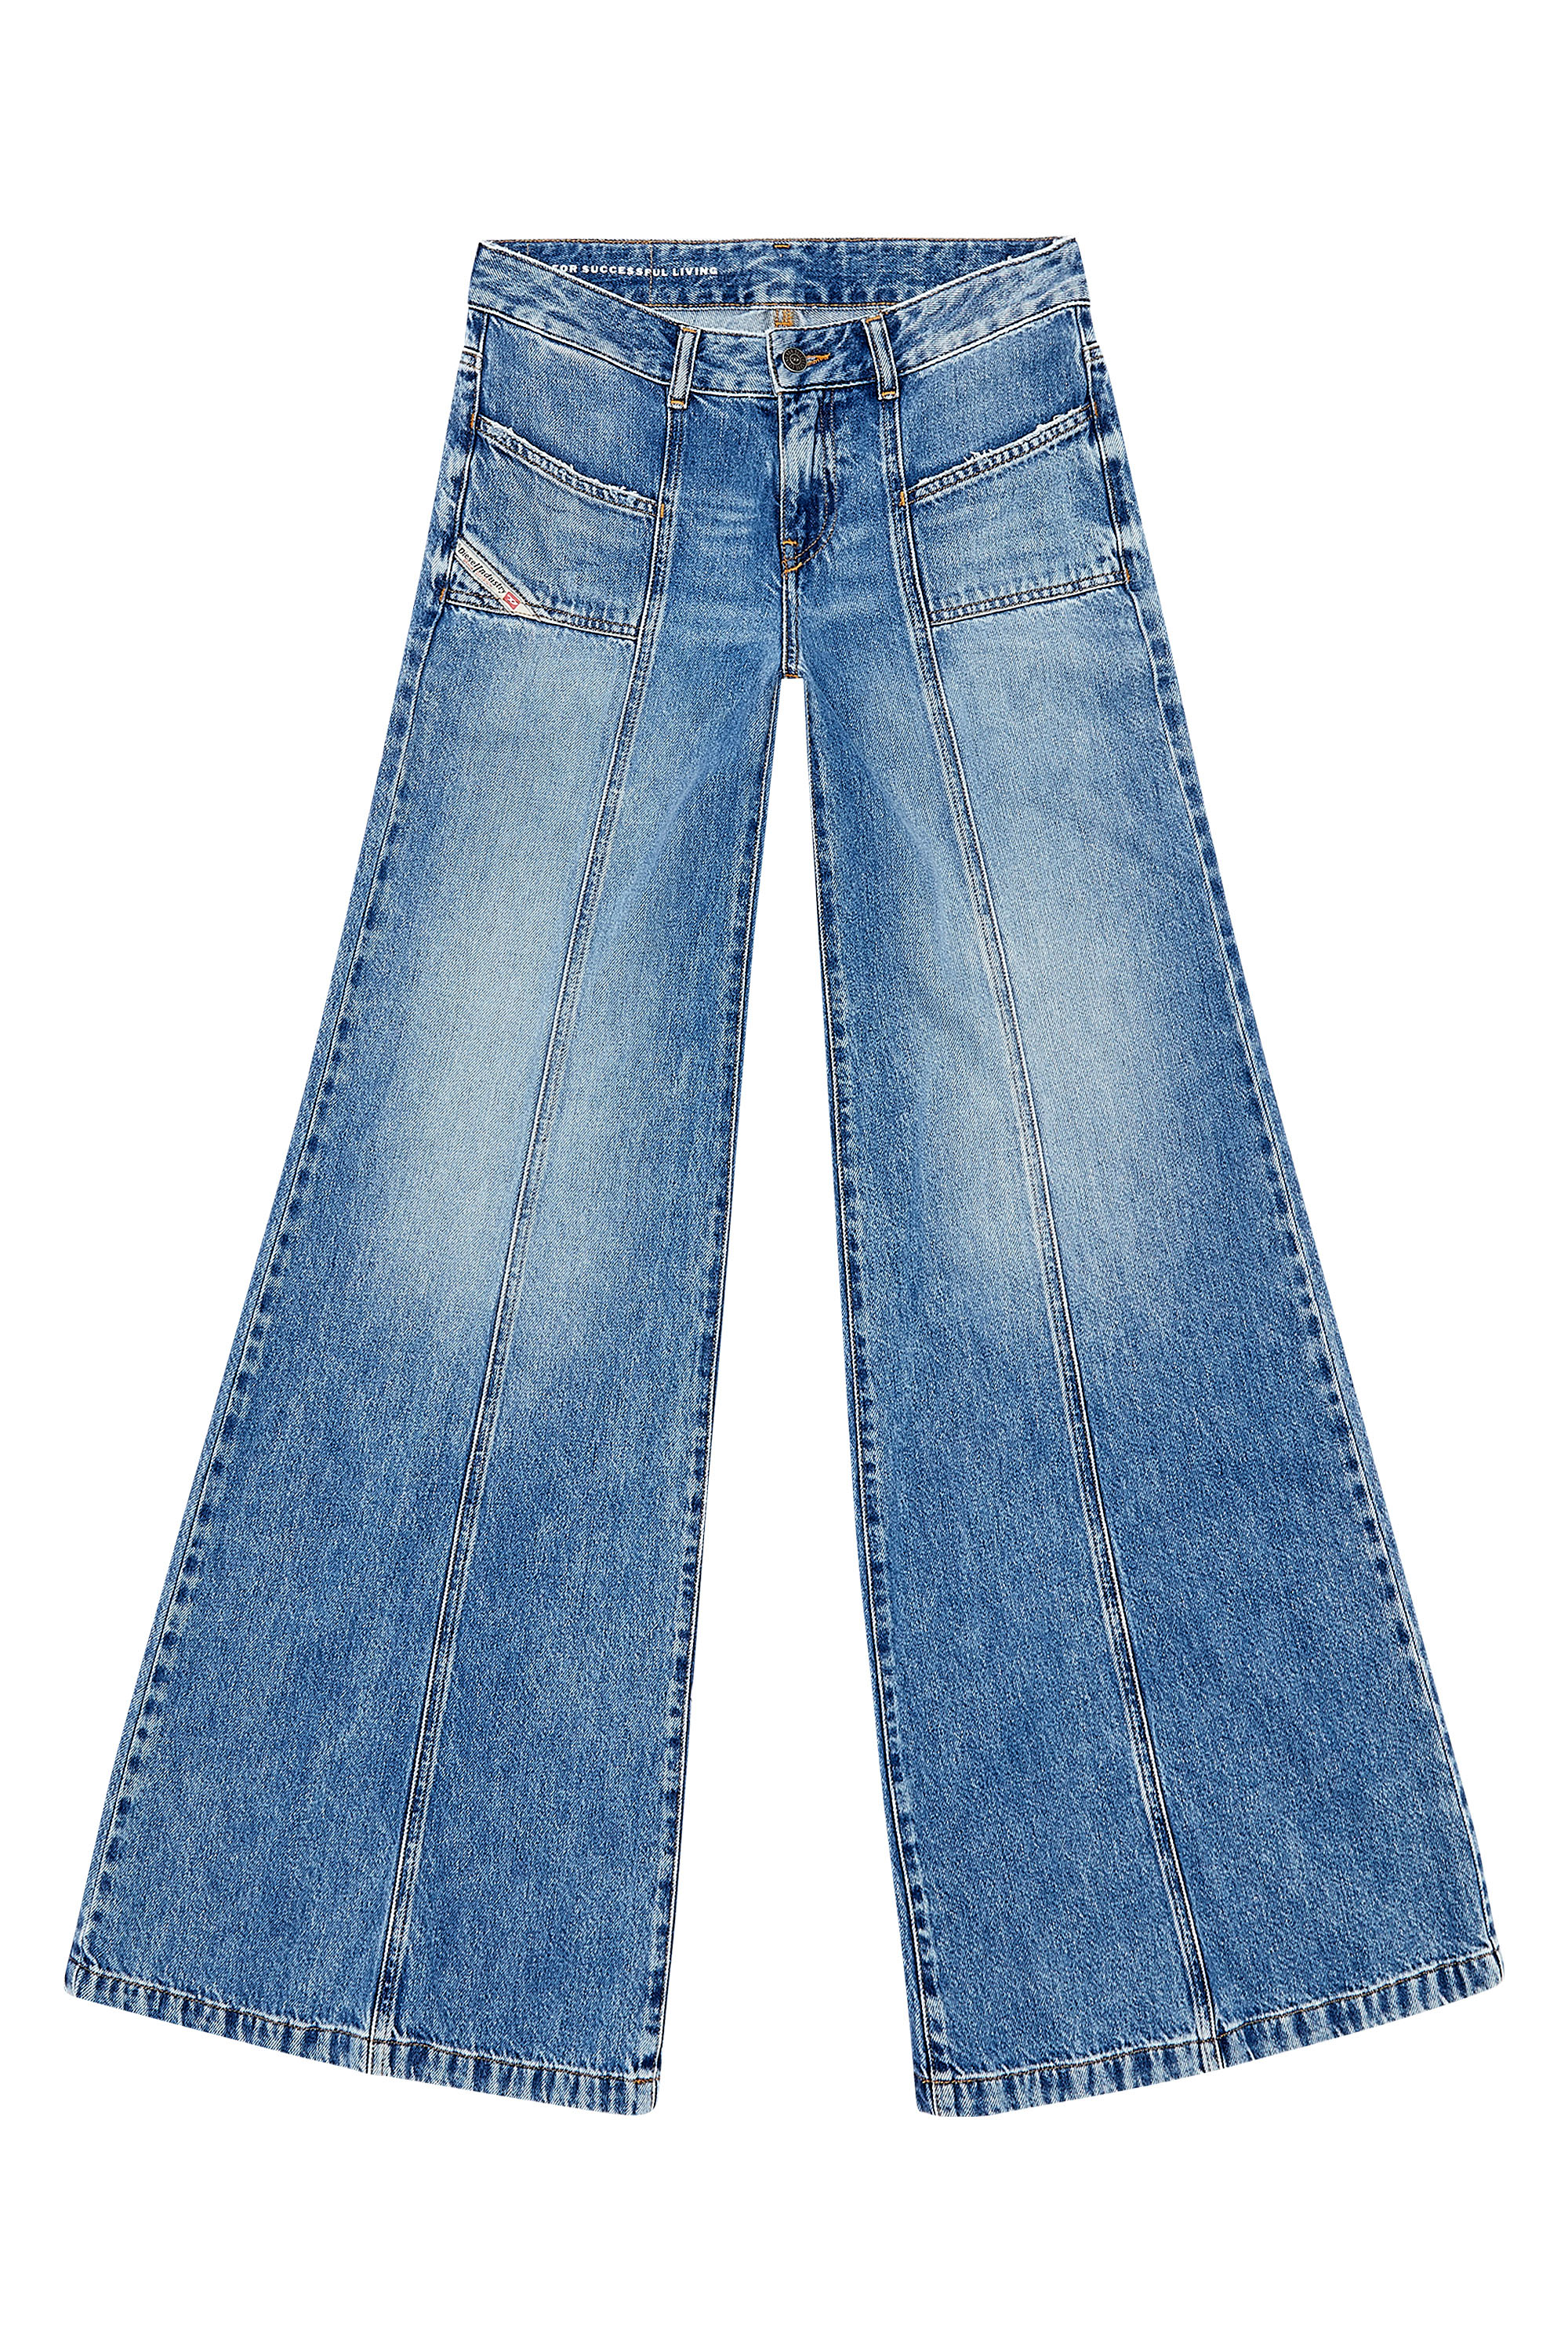 Uerlsty Women's Skinny Denim Bootcut Jeans Long Pants Ladies Low Waist  Flared Trousers 